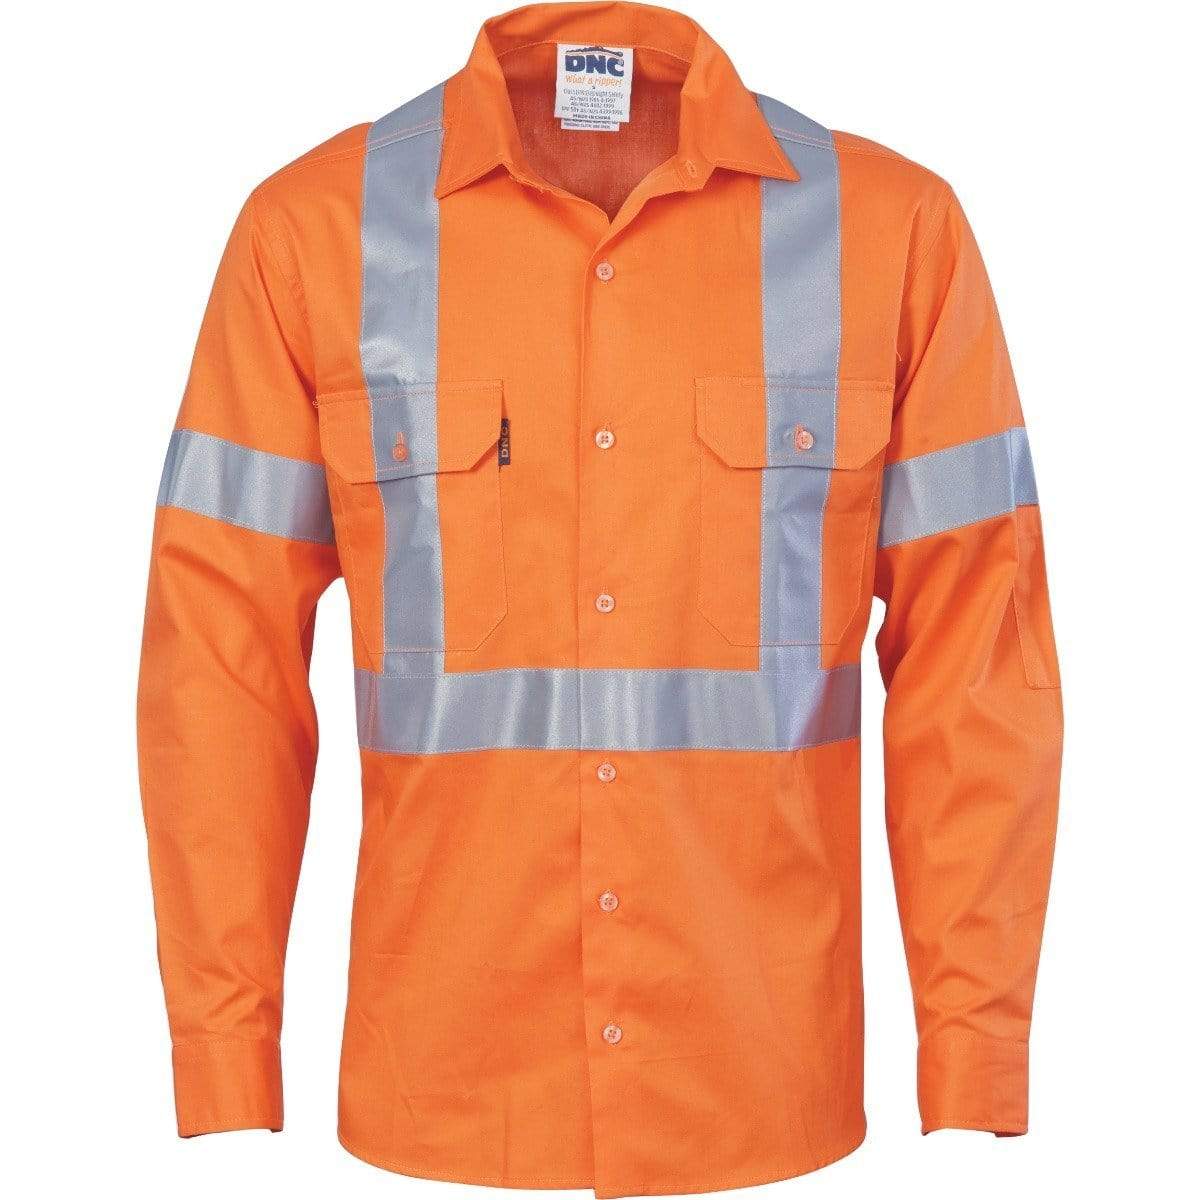 Dnc Workwear X Back Long Sleeve Cotton Shirt With Csr Reflective Tape - 3546 Work Wear DNC Workwear Orange XXS 